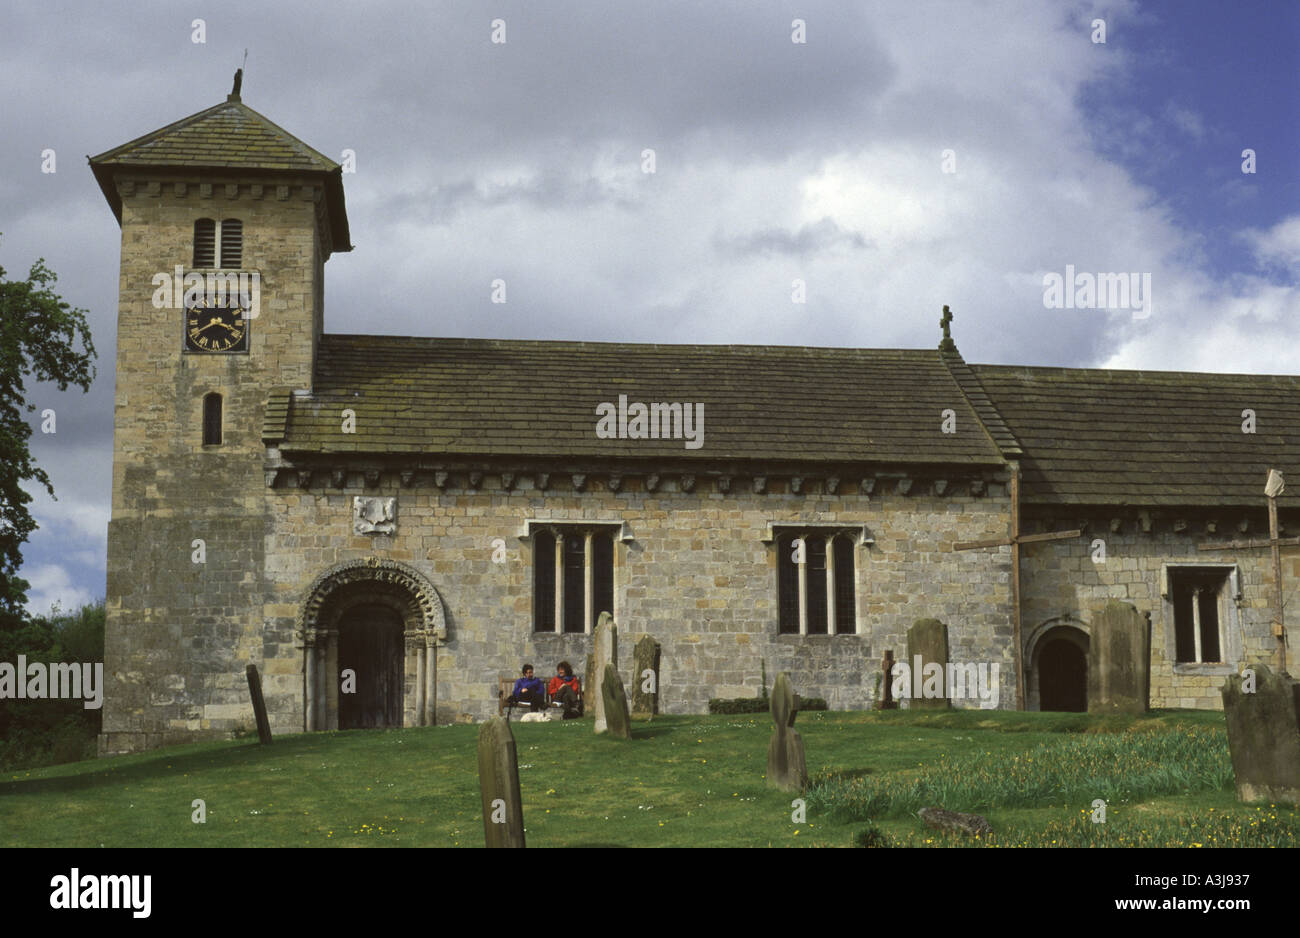 The church of St John the Baptist Healaugh, North Yorkshire, England, UK. Stock Photo